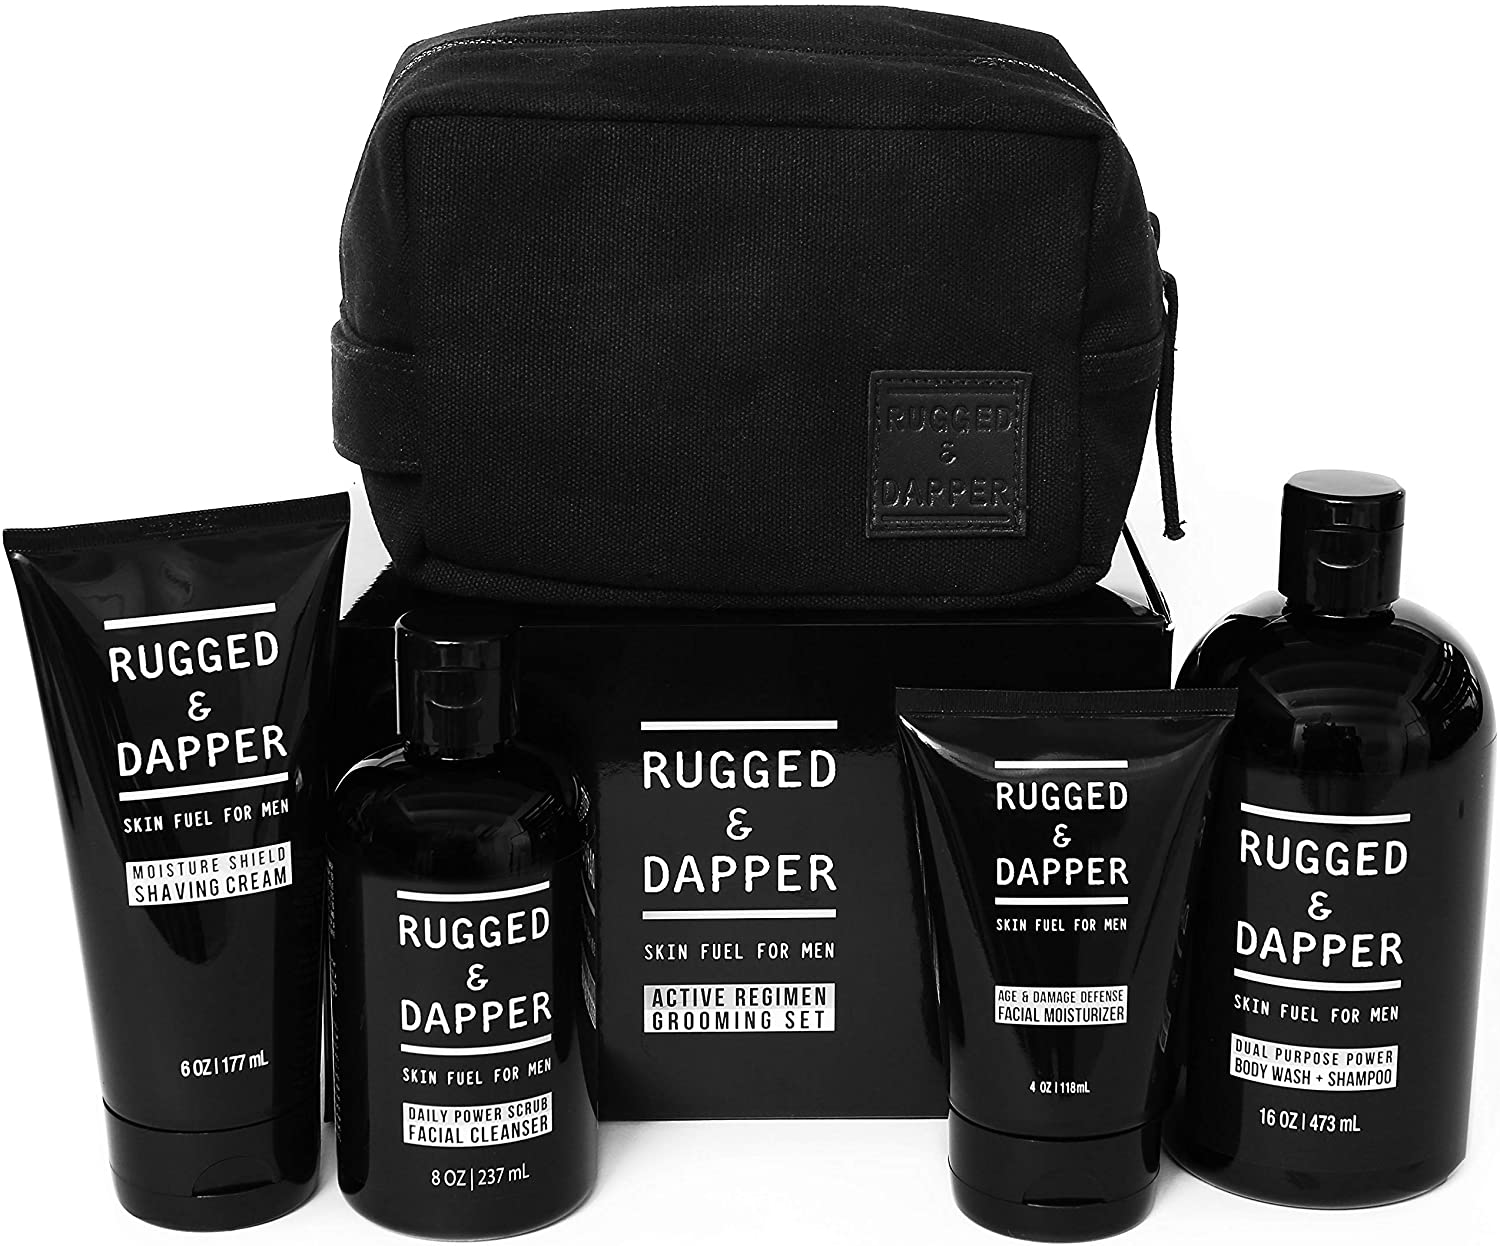 Rugged & Dapper: Active Regimen Grooming and Skincare Set